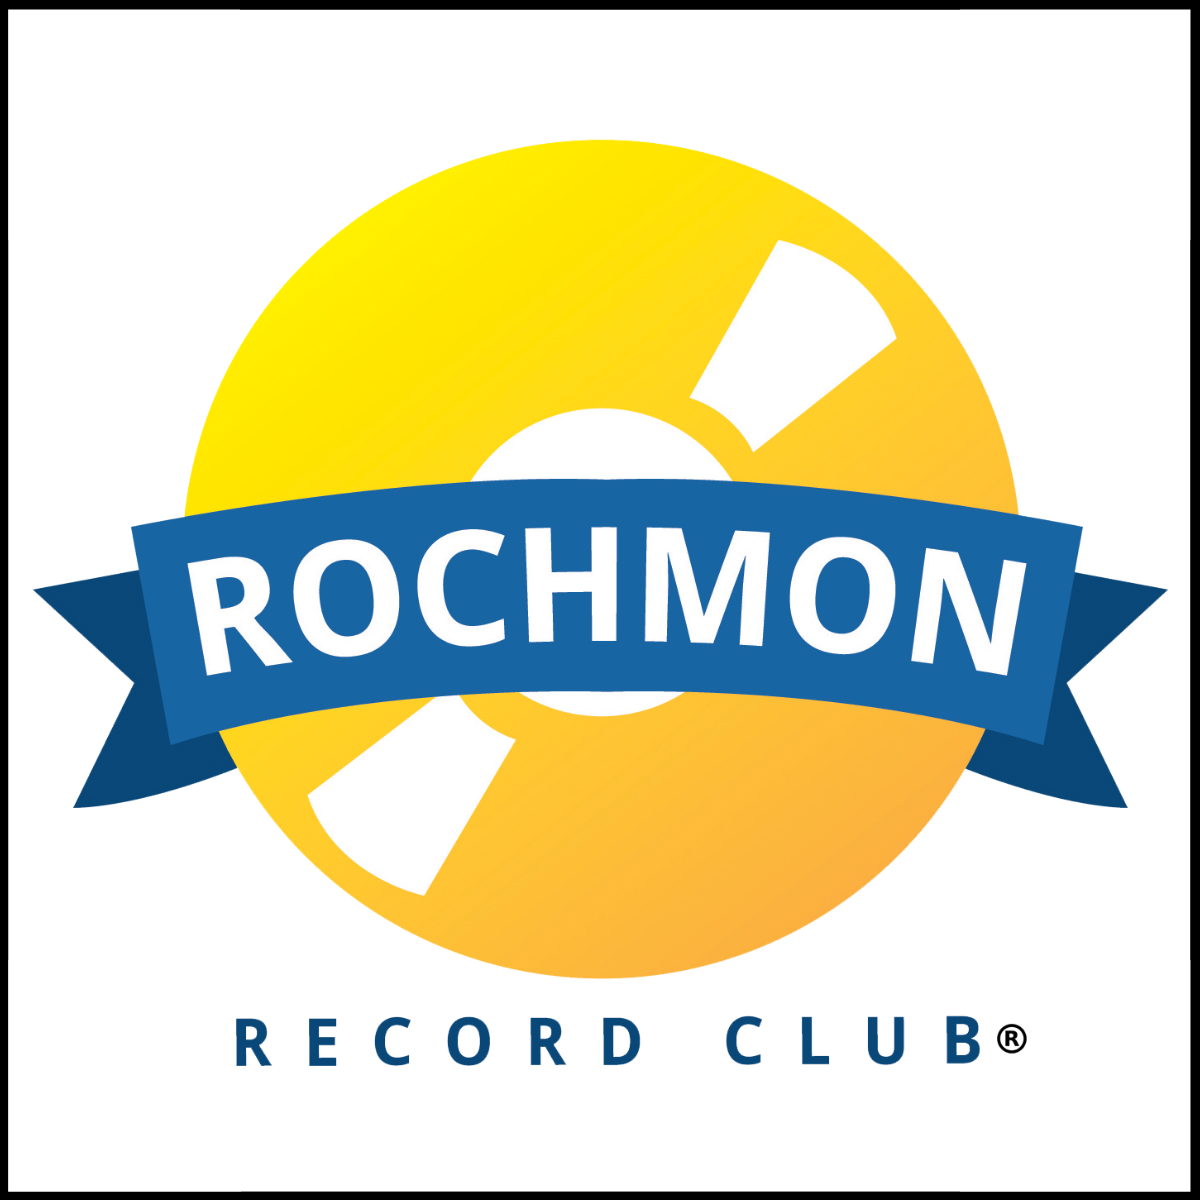 Rochmon Record Club Logo